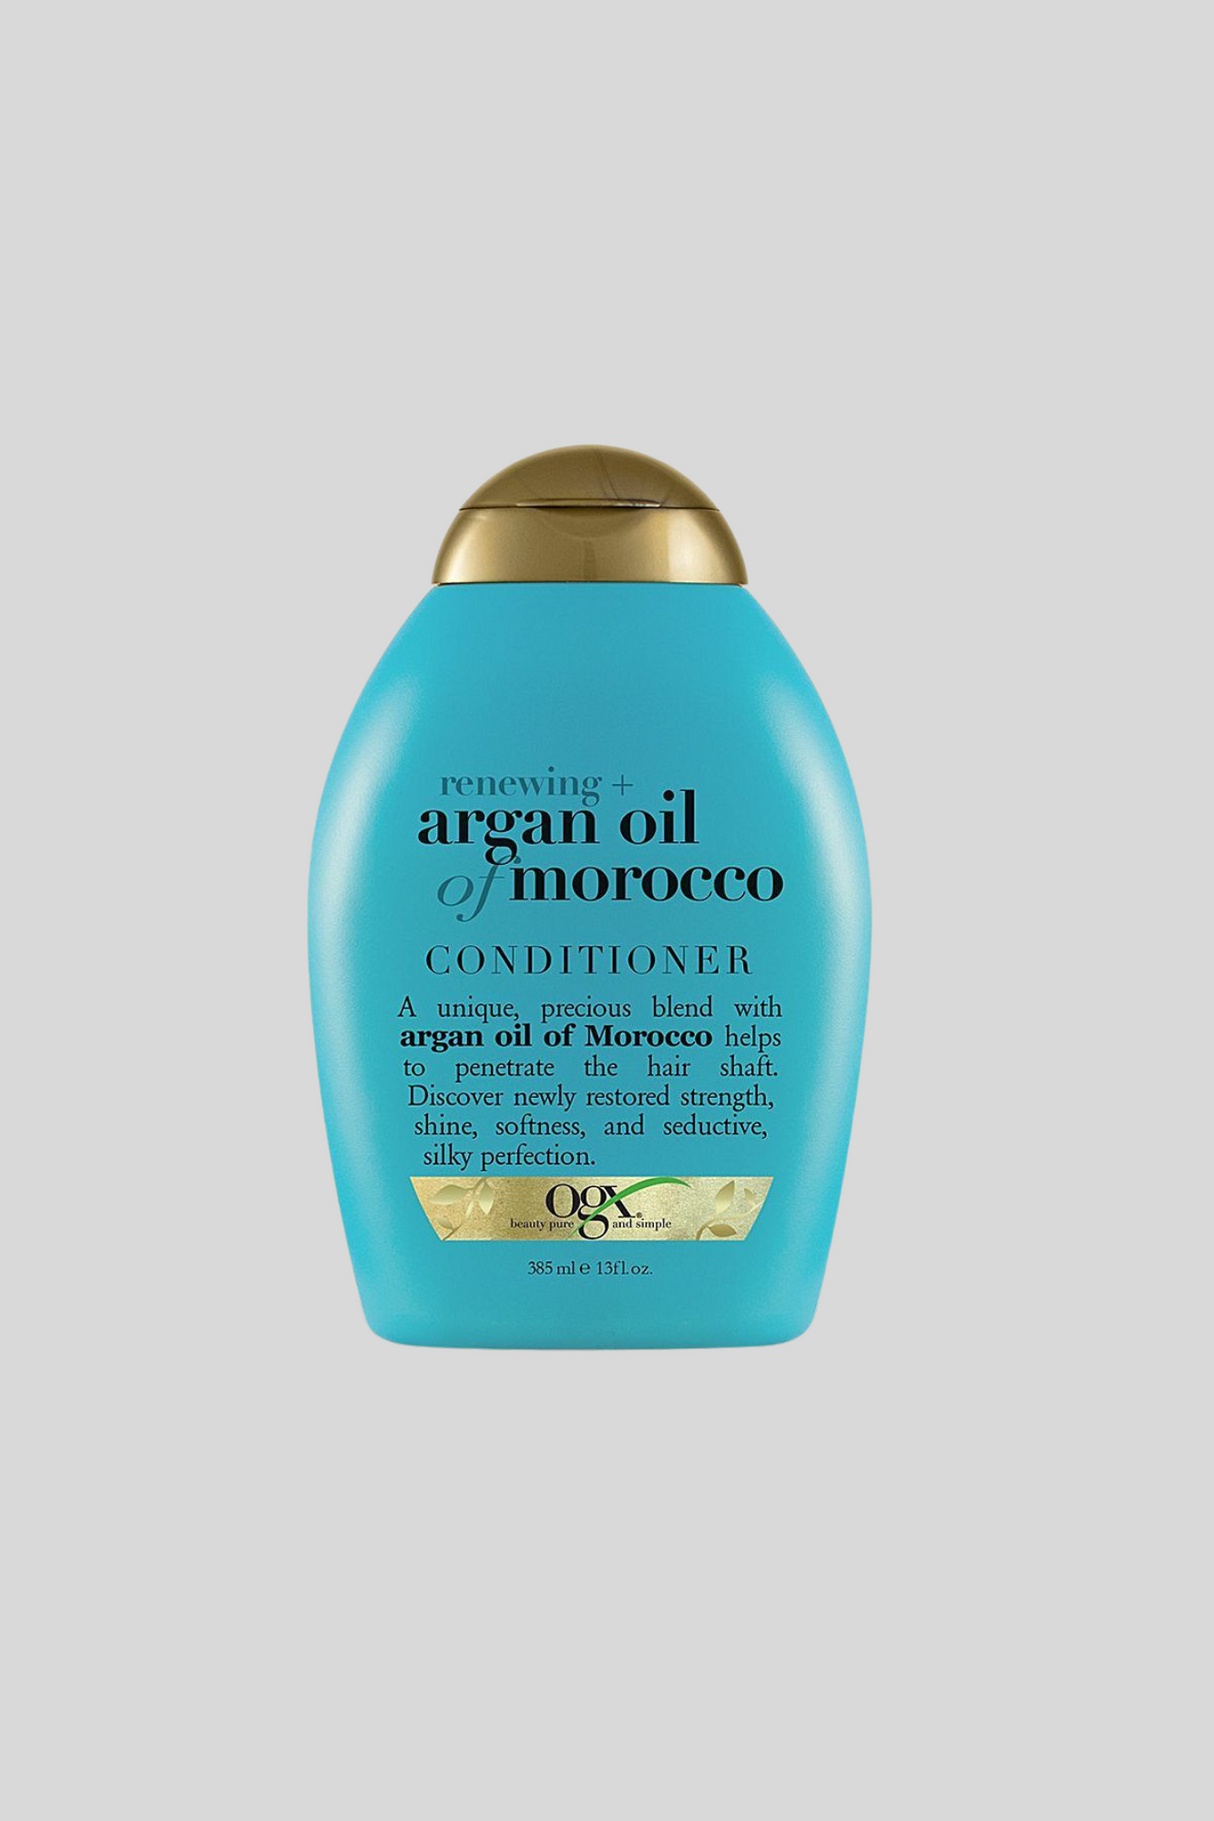 ogx conditioner argan oil of morocco 385ml